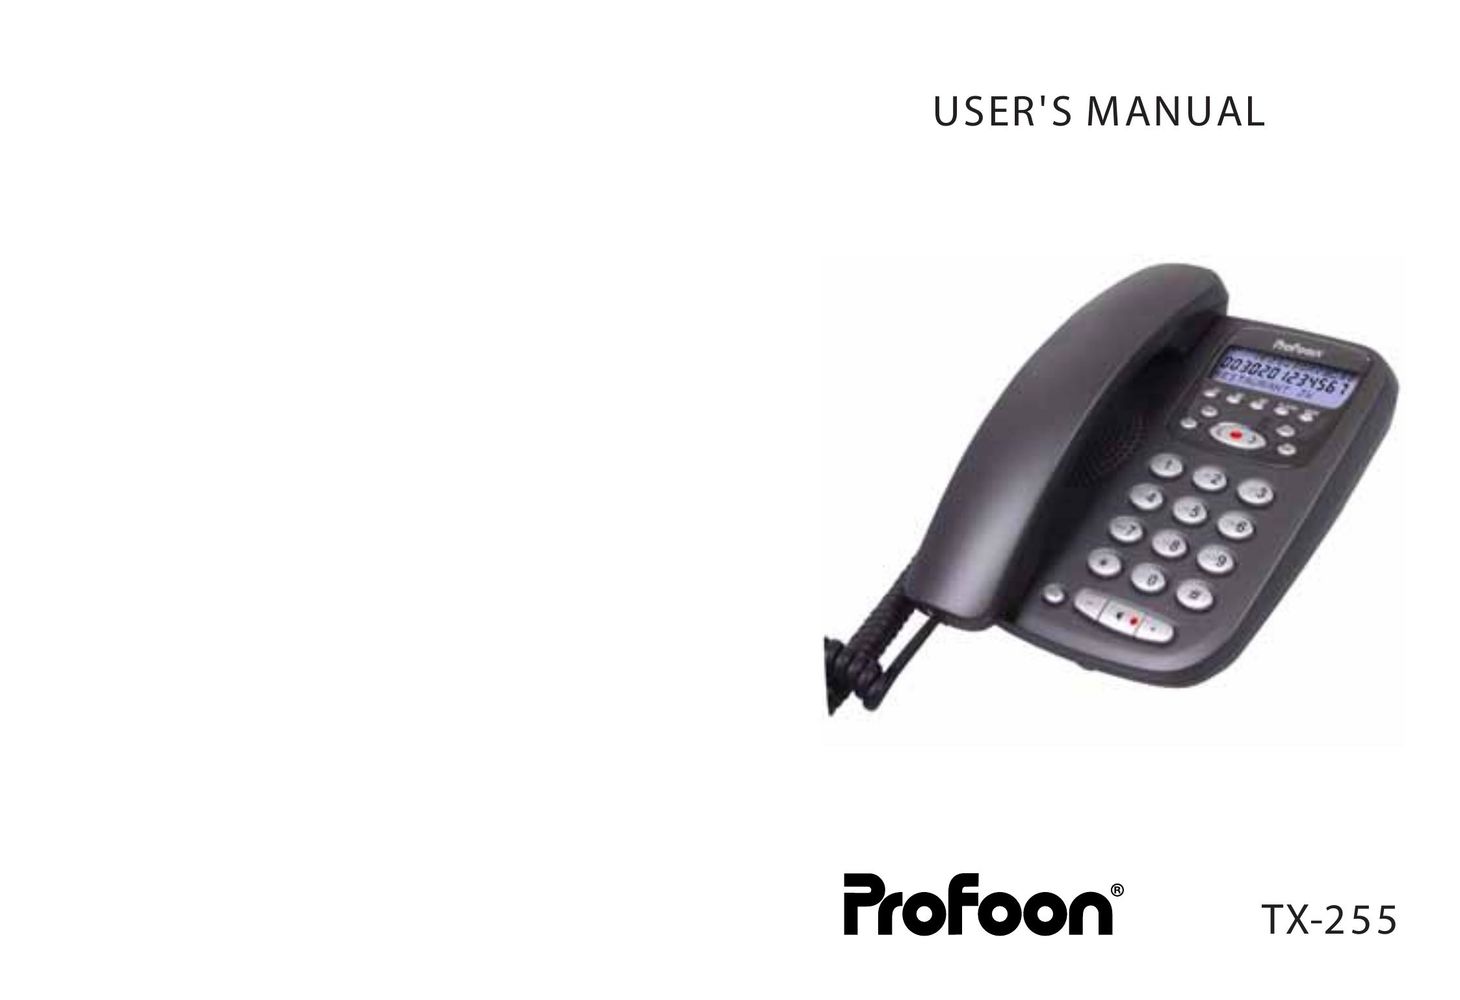 Profoon Telecommunicatie TX-255 Cordless Telephone User Manual